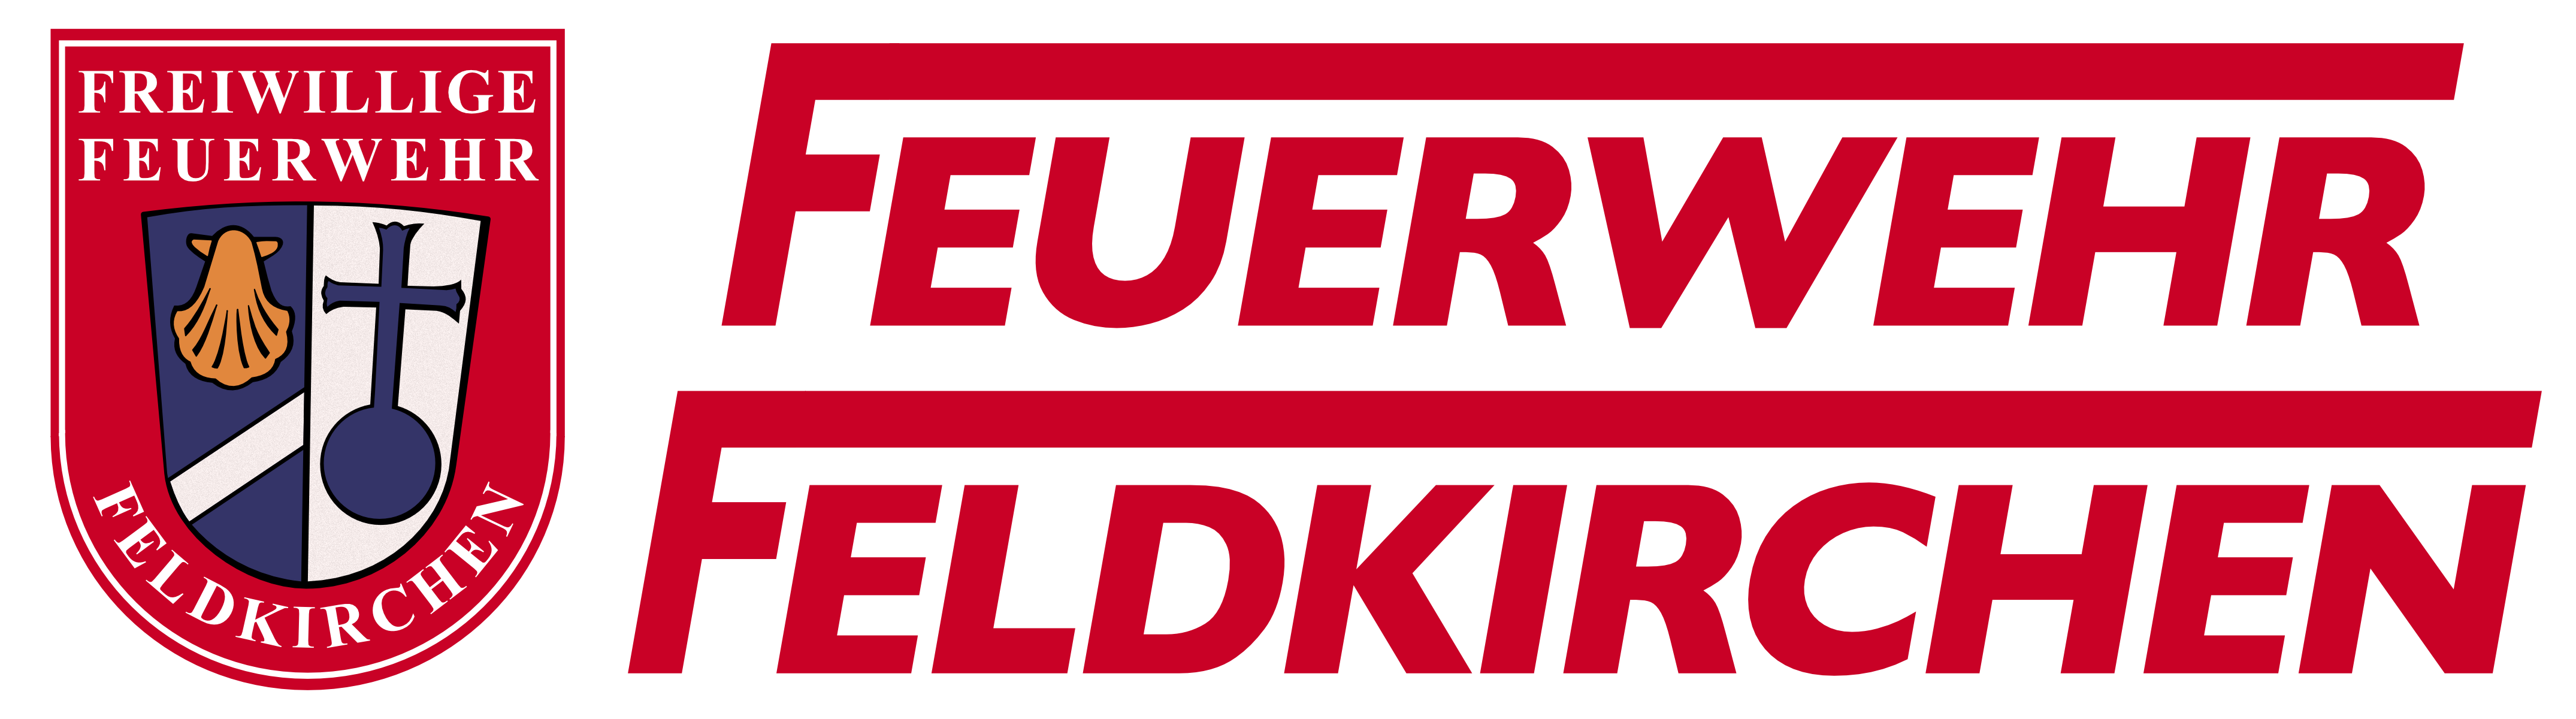 Freiwillige Feuerwehr Feldkirchen e.V.